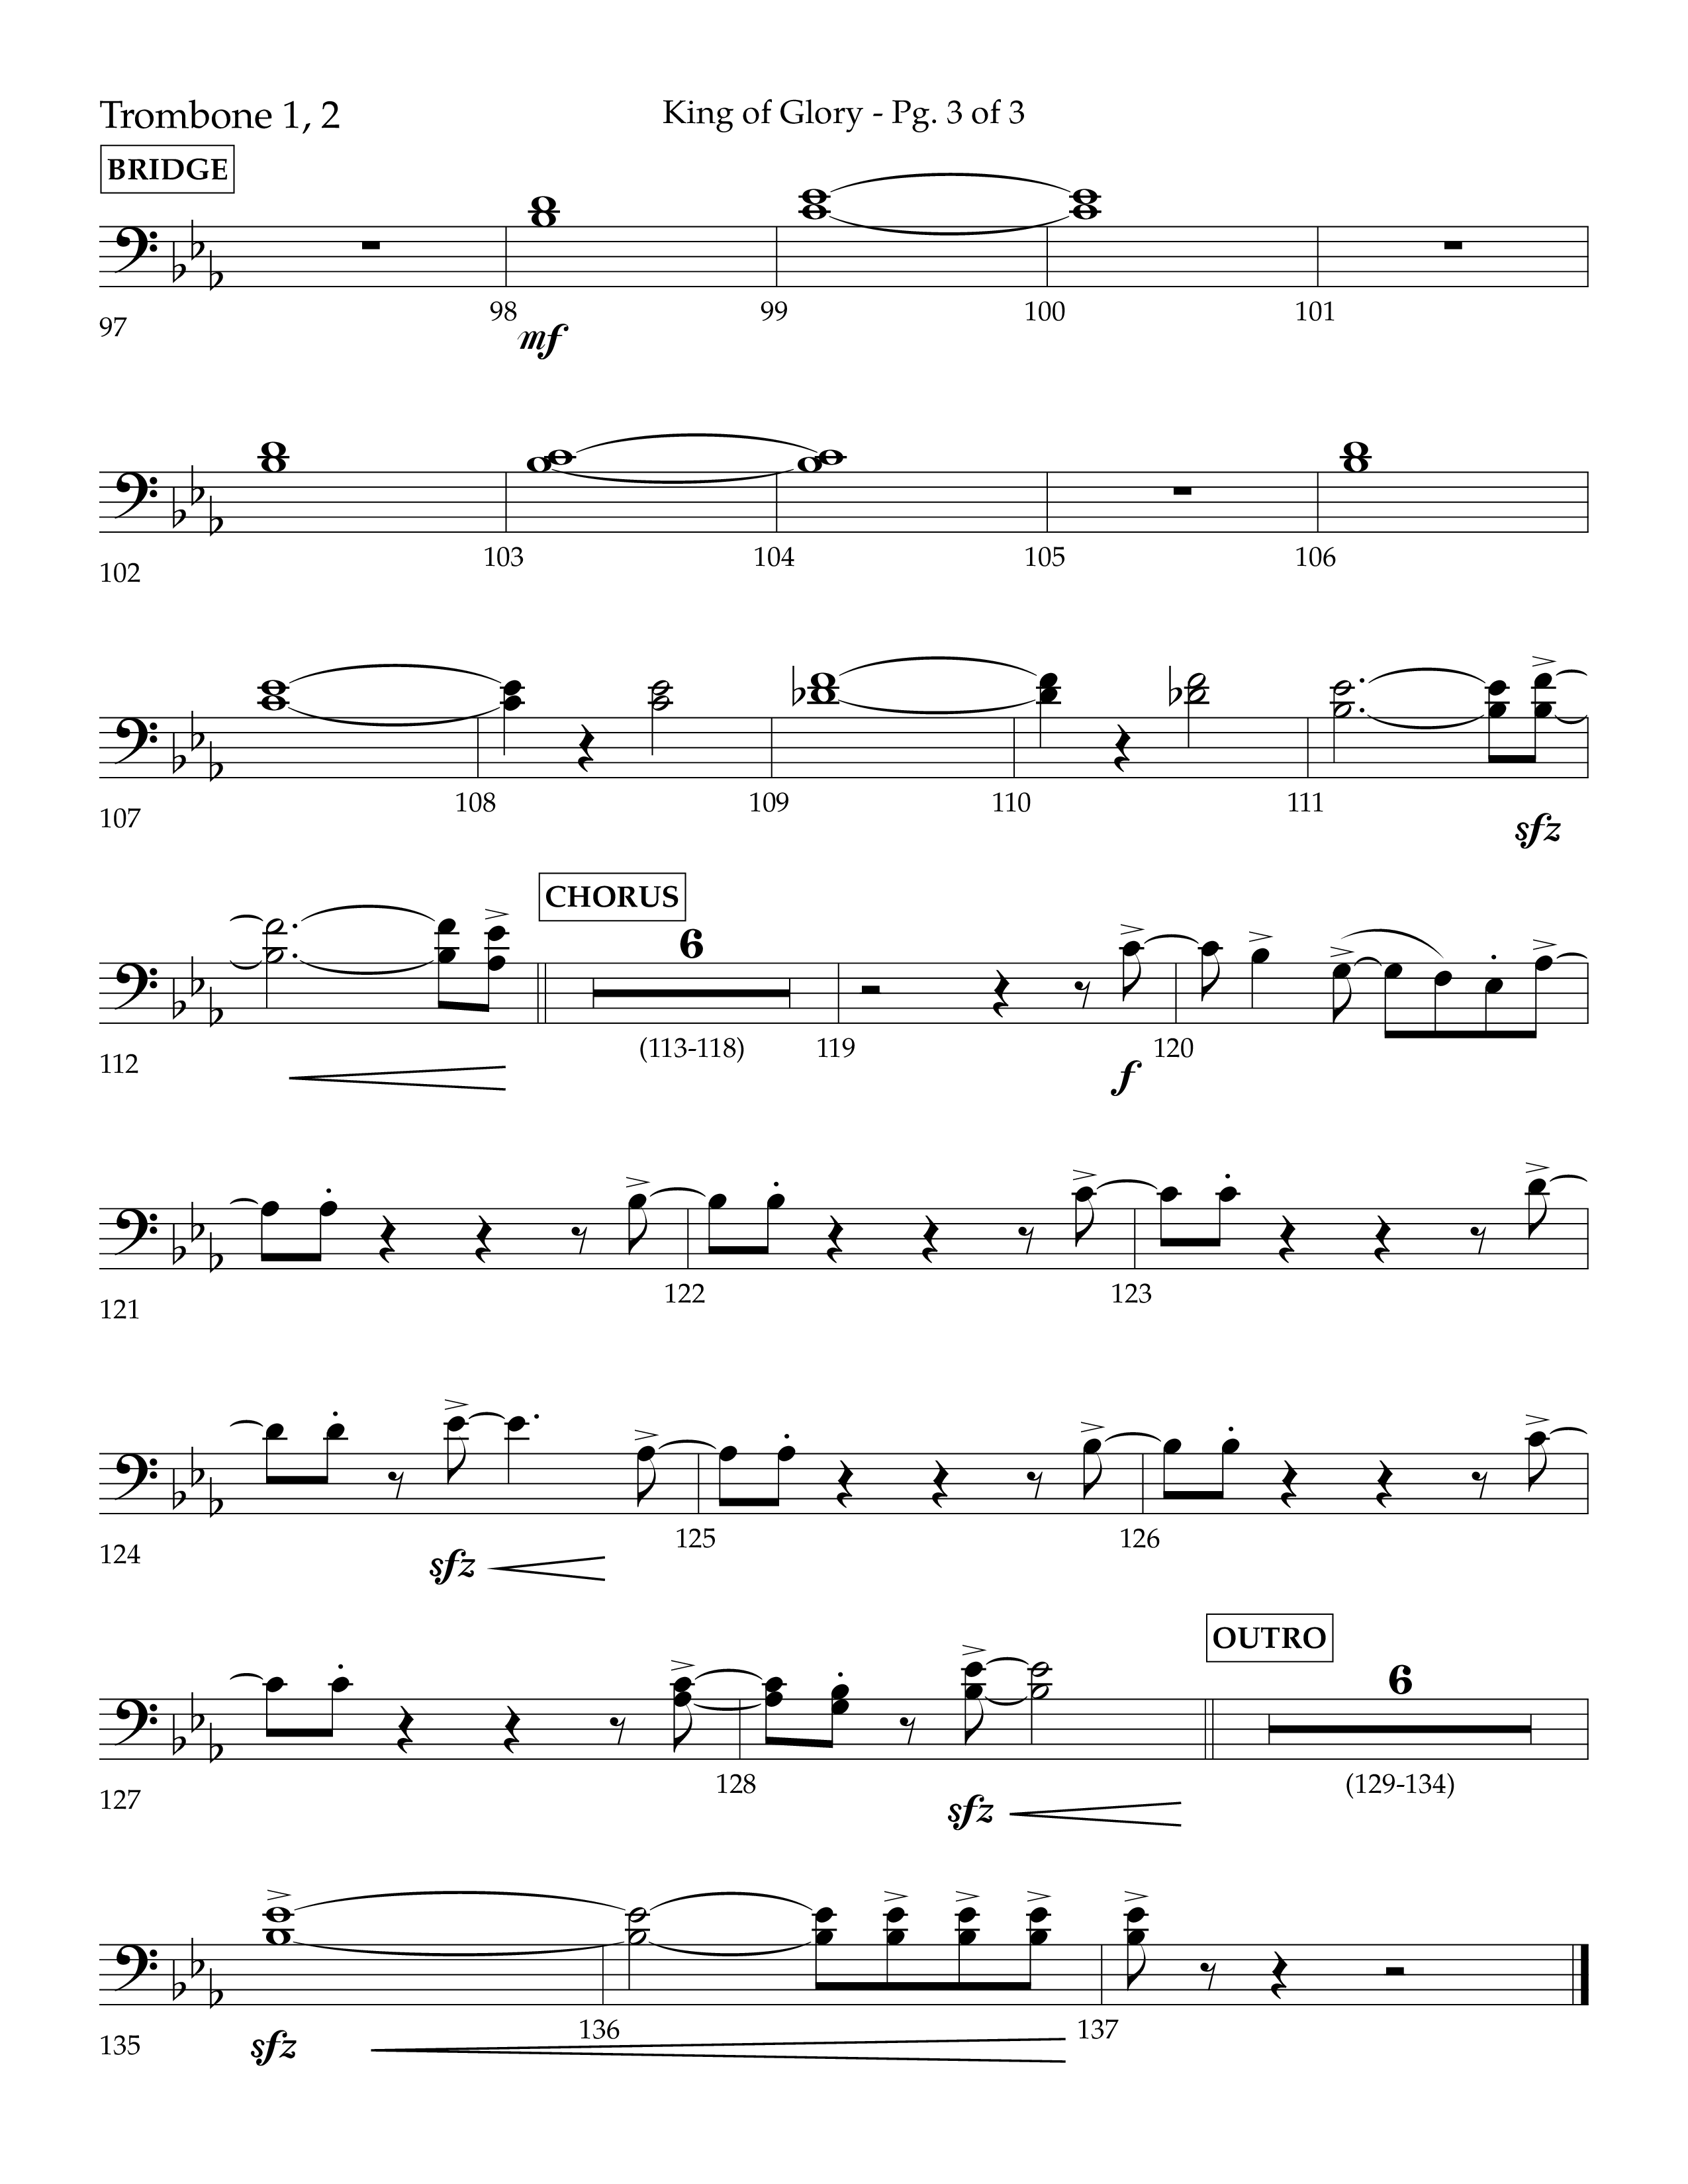 King of Glory (Choral Anthem SATB) Trombone 1/2 (Lifeway Choral / Arr. John Bolin / Arr. Don Koch / Orch. Eric Belvin)